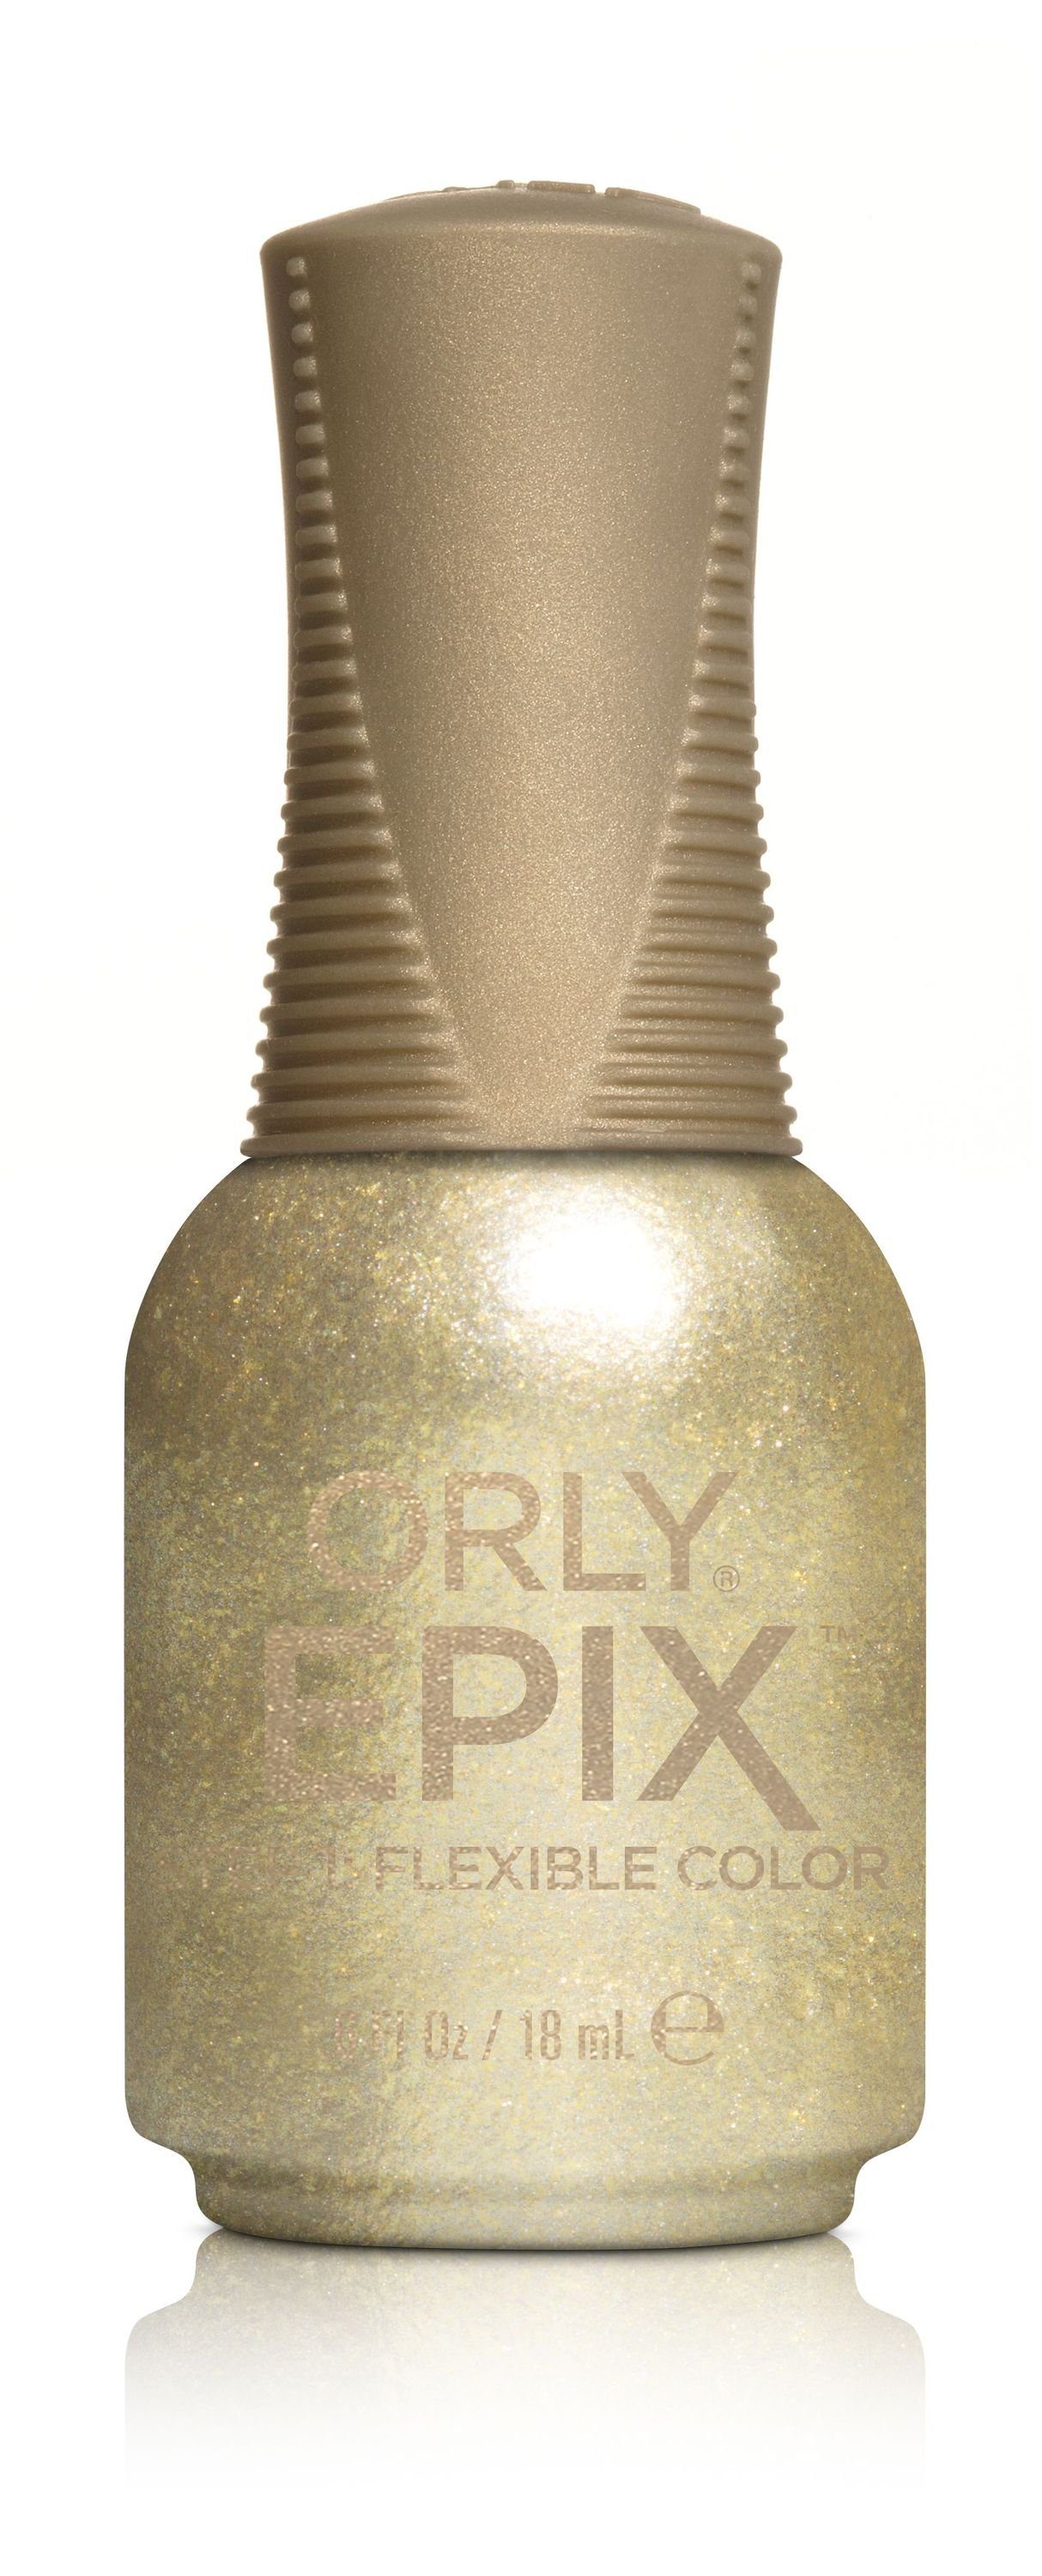 ORLY Nagellack ORLY - EPIX Flexible Color - Tinseltown, 18 ML